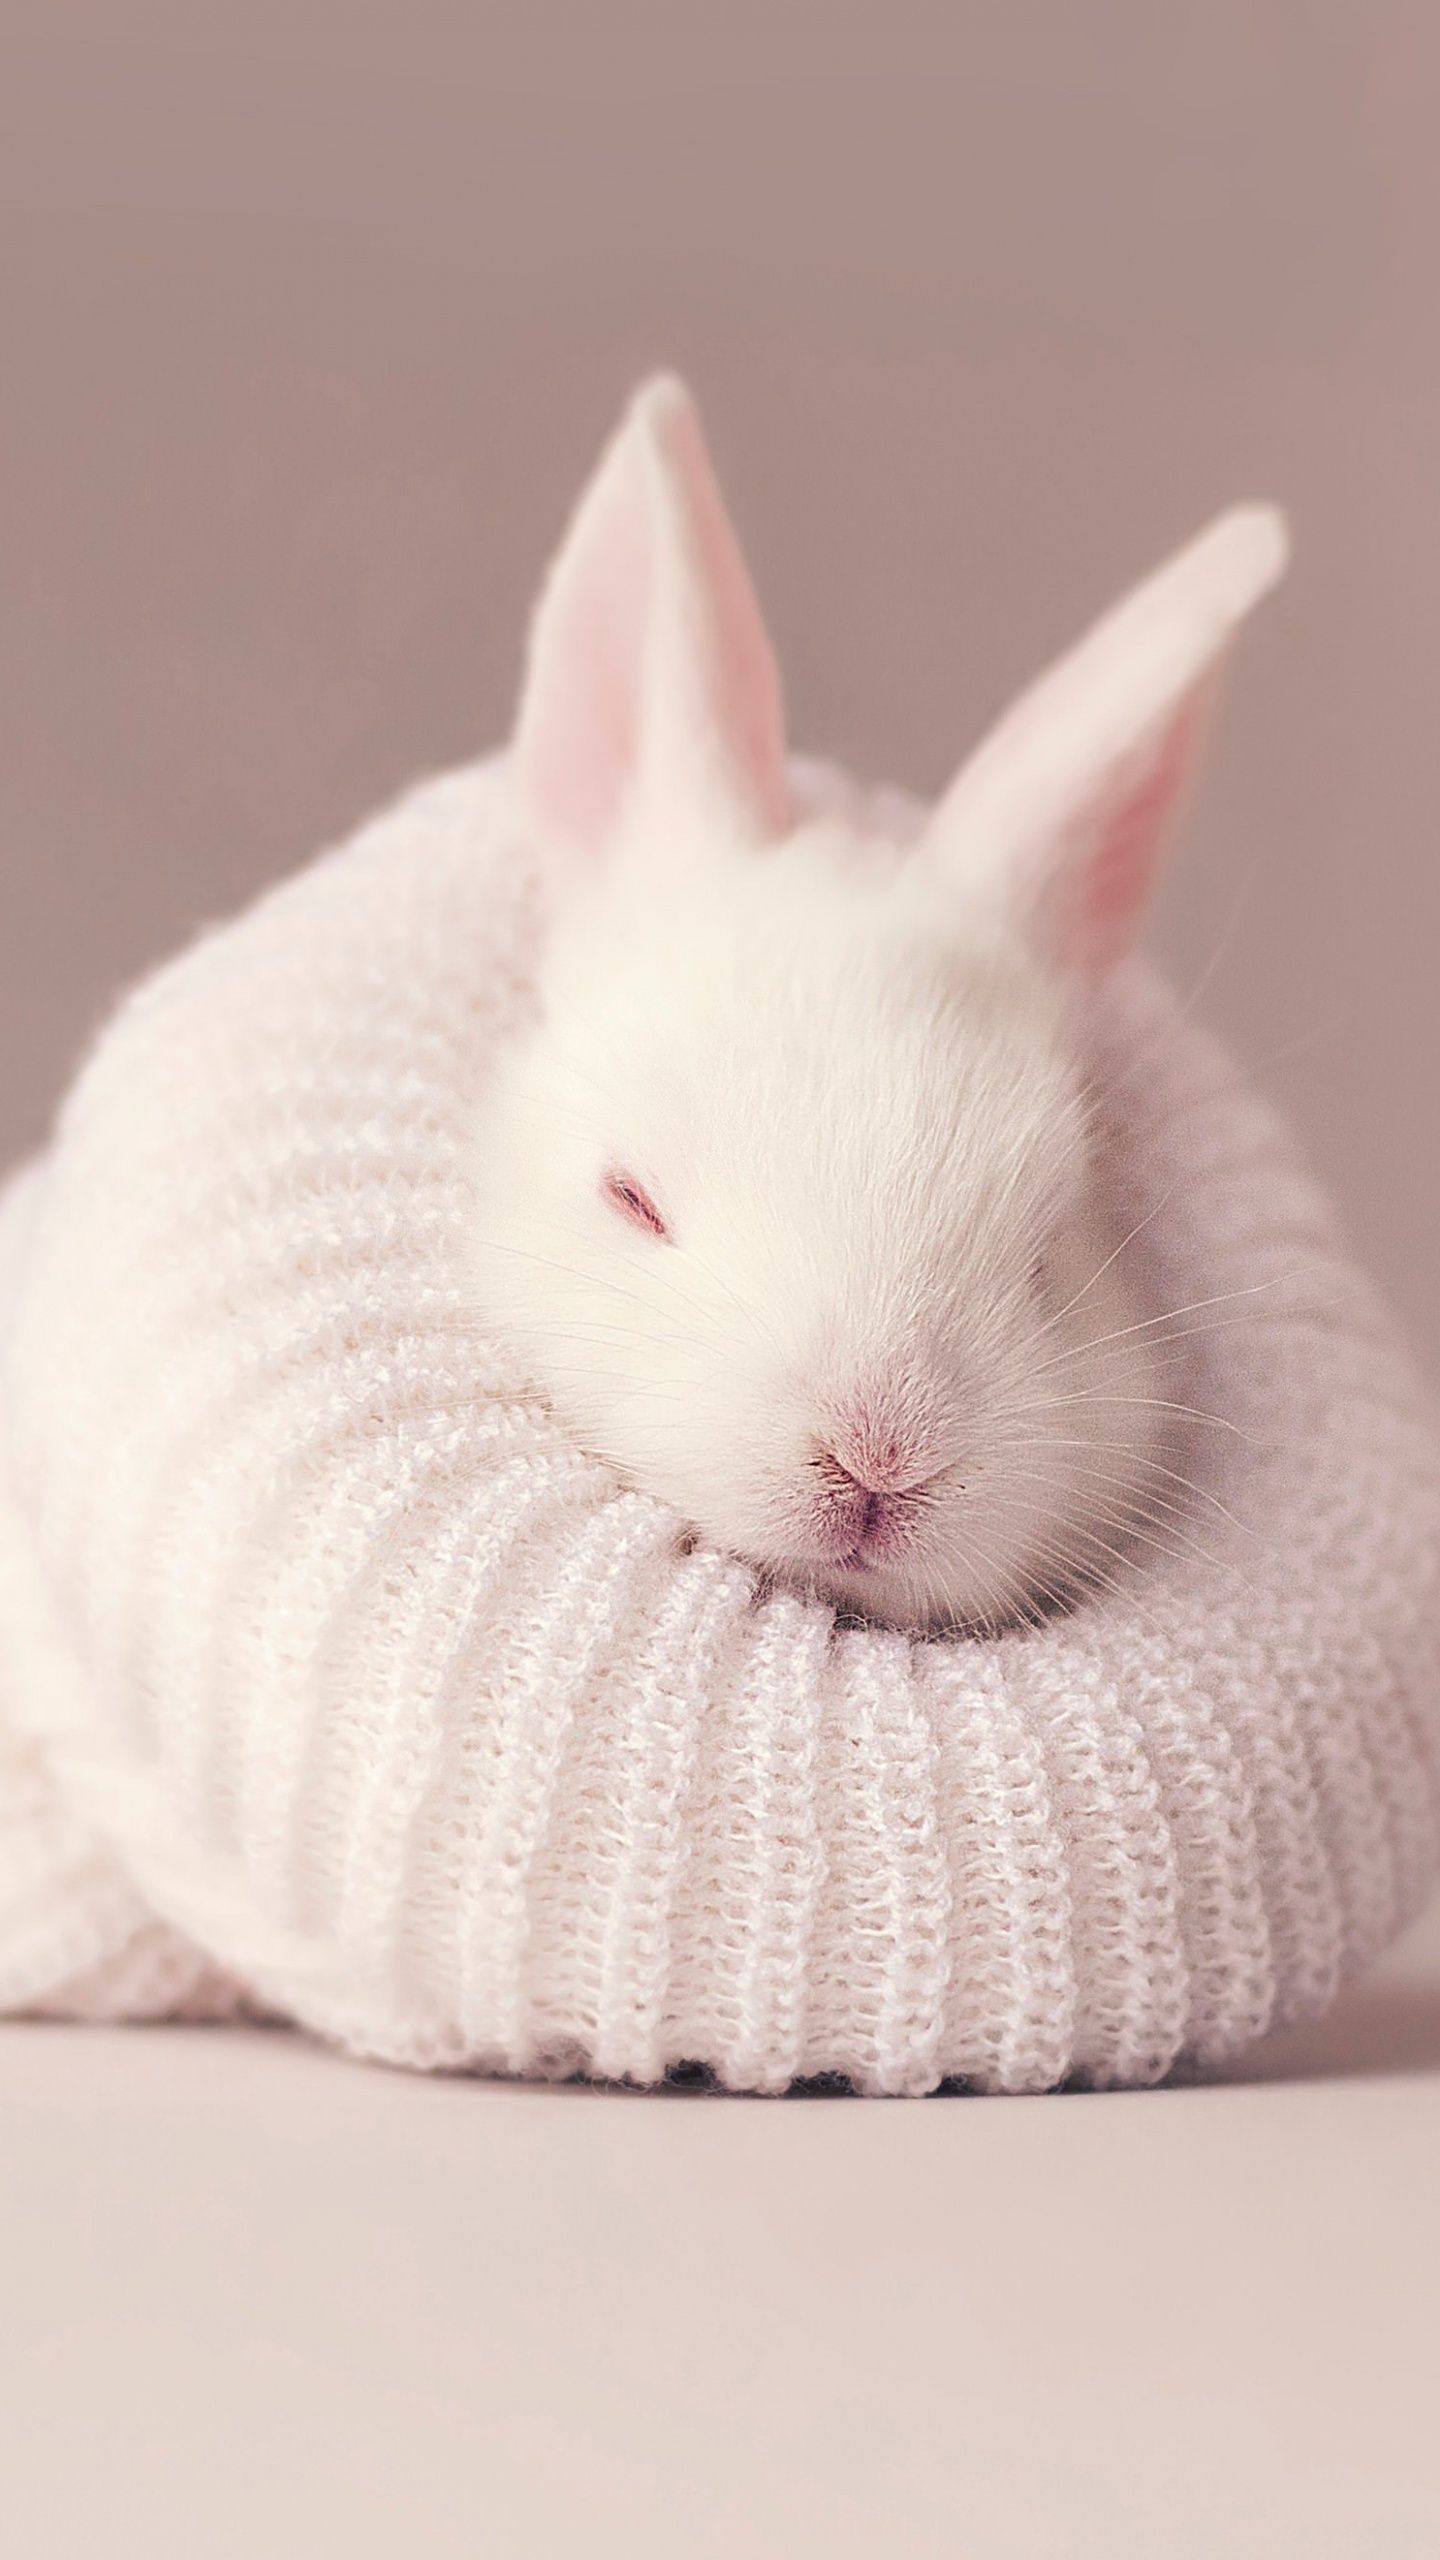 A white rabbit is sleeping on a white pillow - Cute white